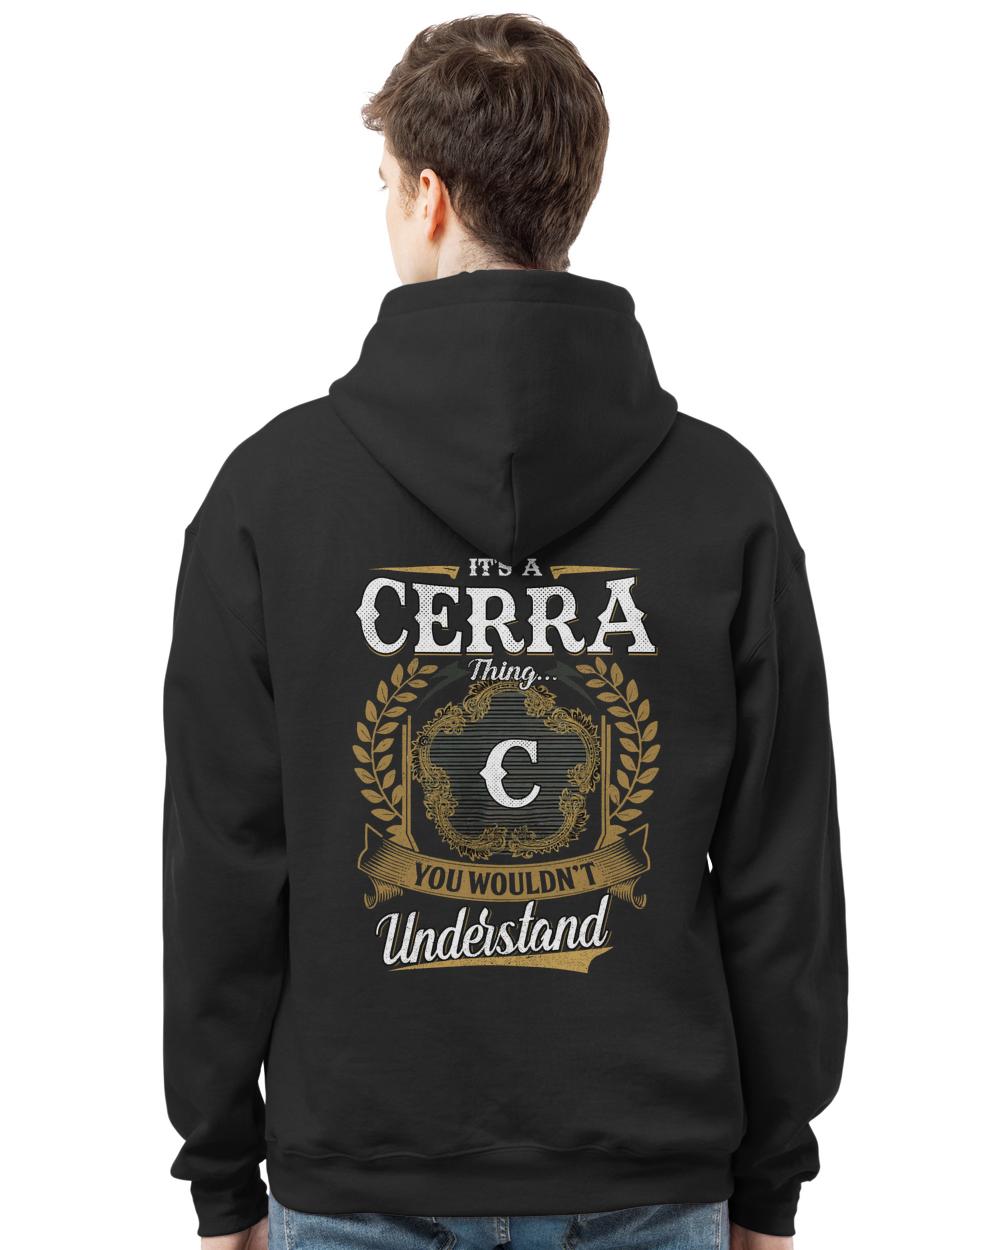 CERRA-13K-1-01